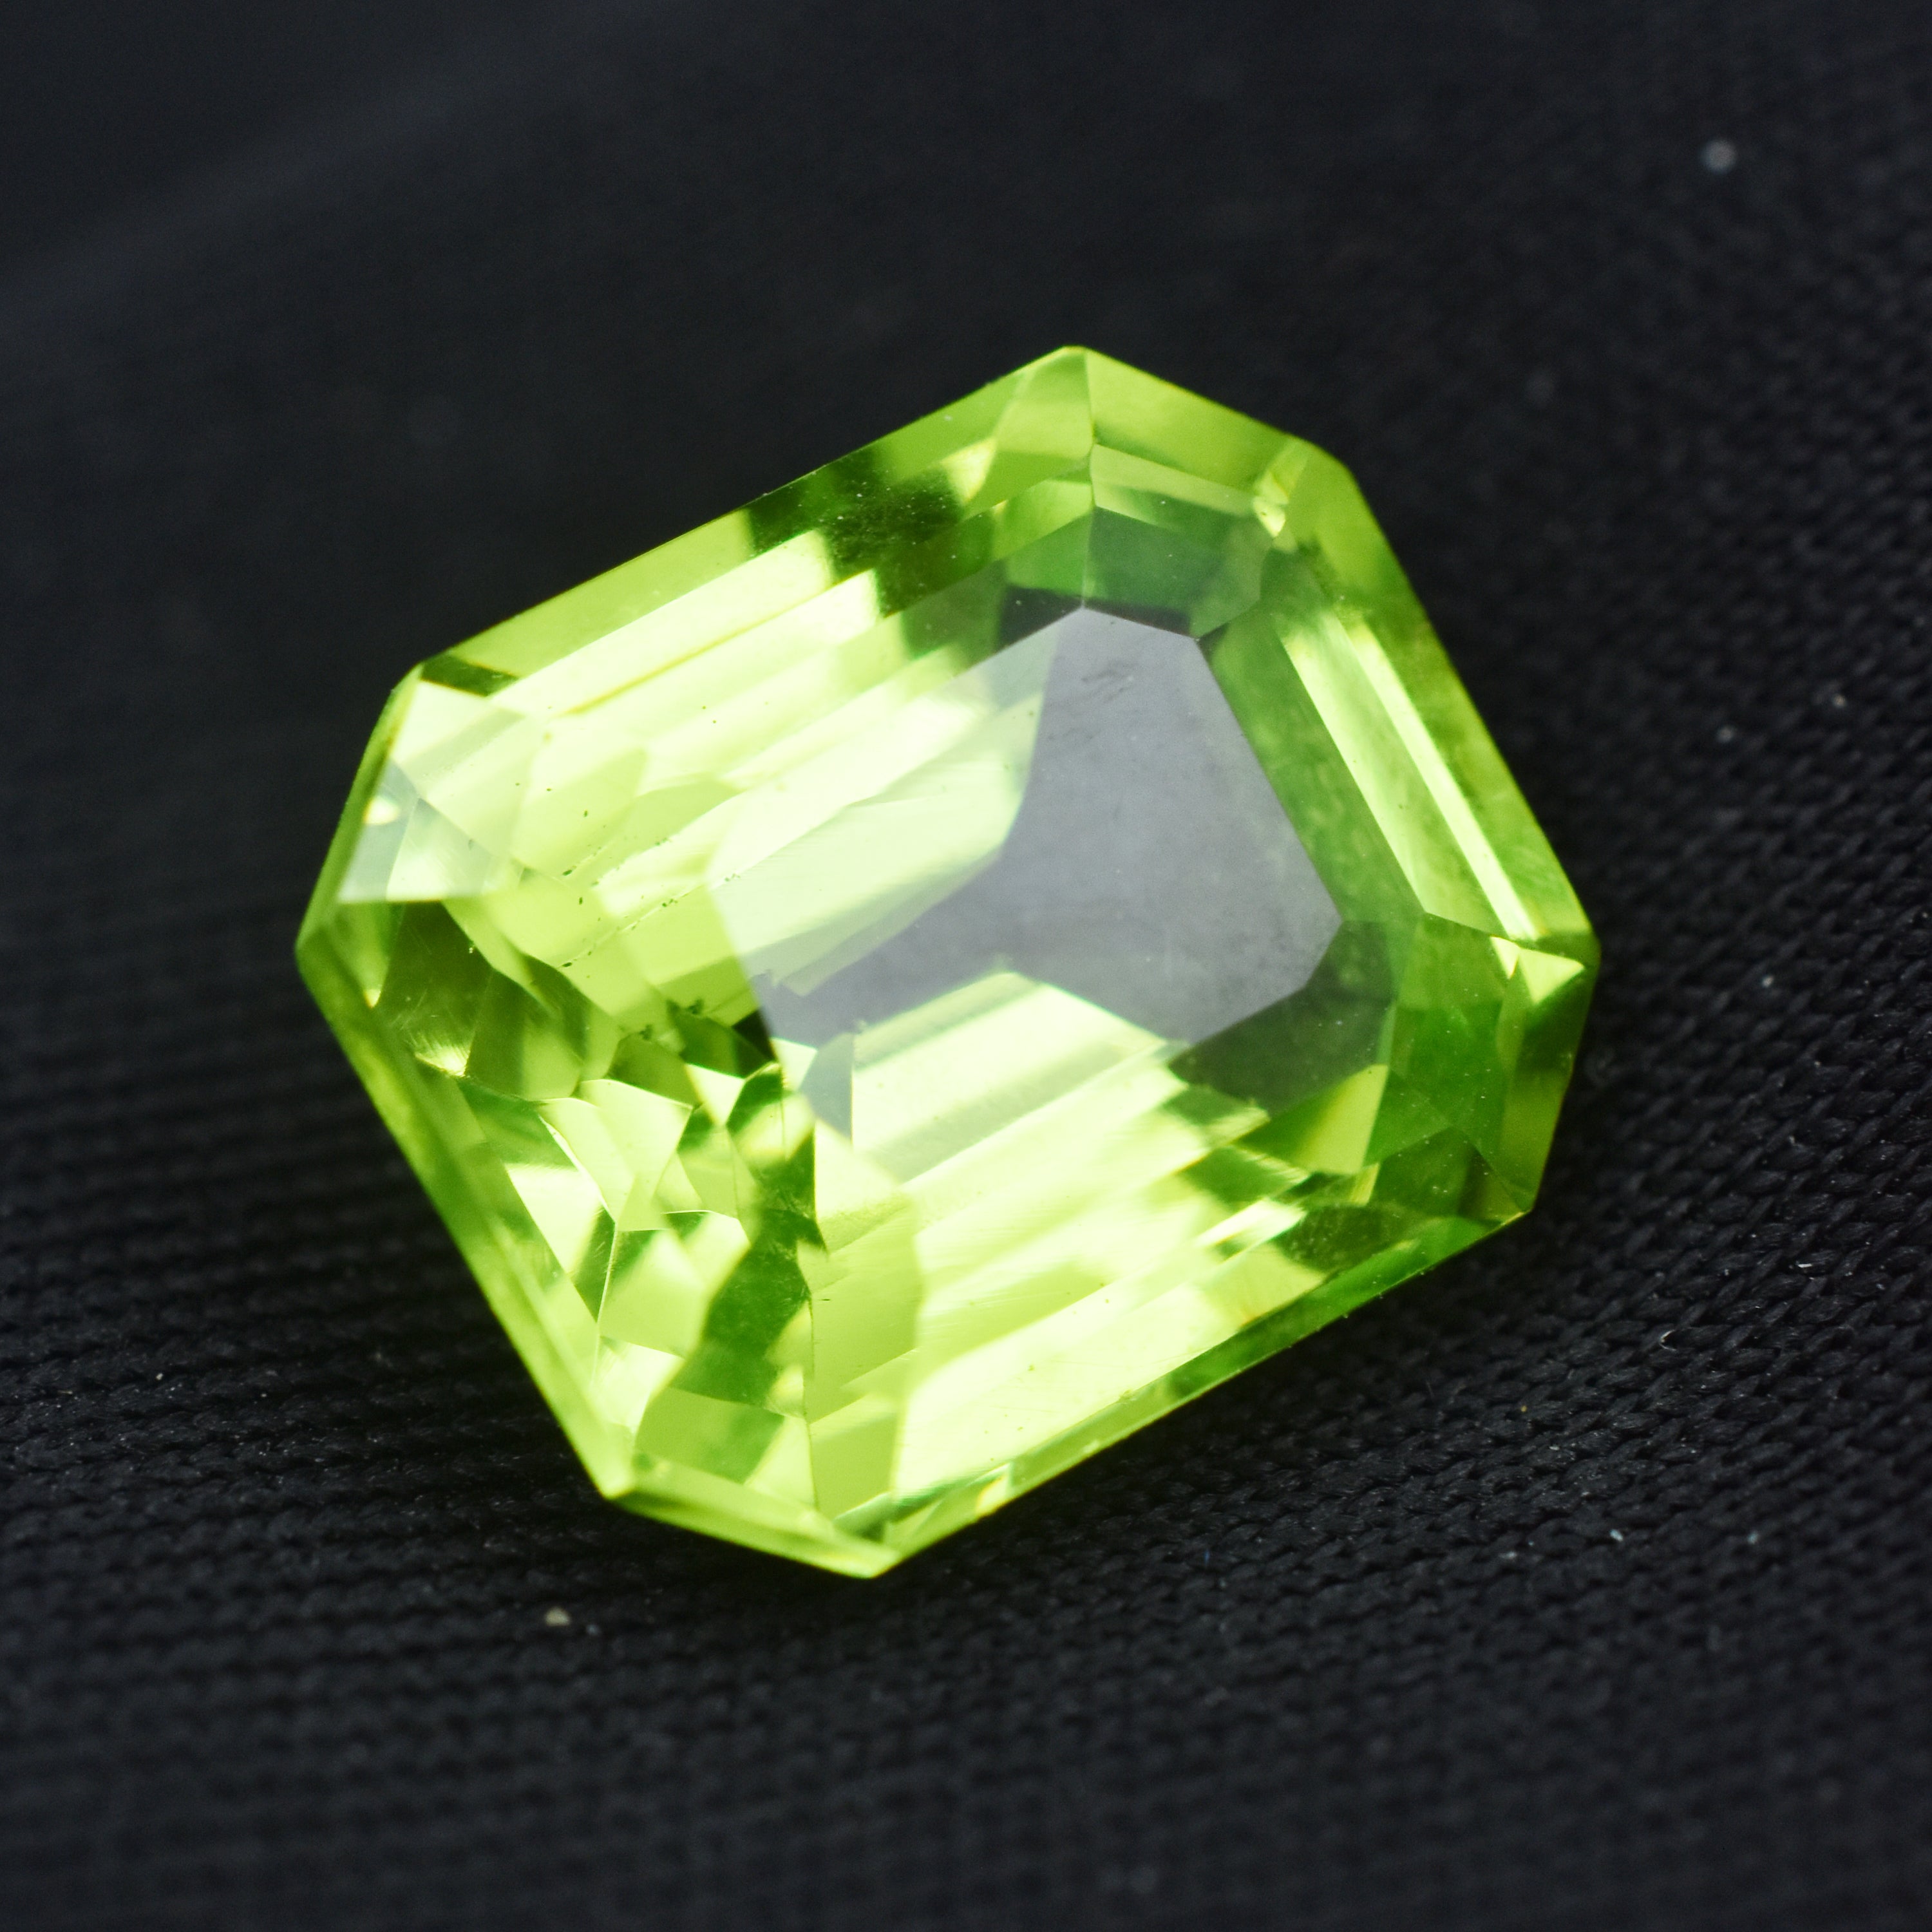 Limited Offer ! Natural Peridot Certified 9.63 Carat Emerald Shape Peridot Loose Gemstone Ring Size Emerald Gemstone Loose - Free Delivery-Free Gift